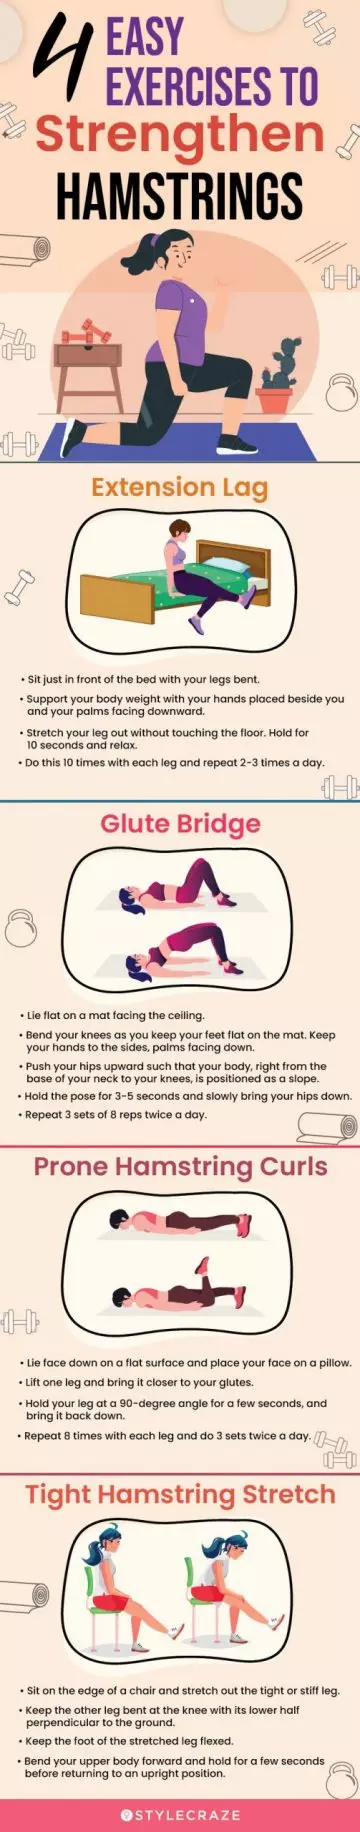 4 easy exercises for hamstring strengthening (infographic)